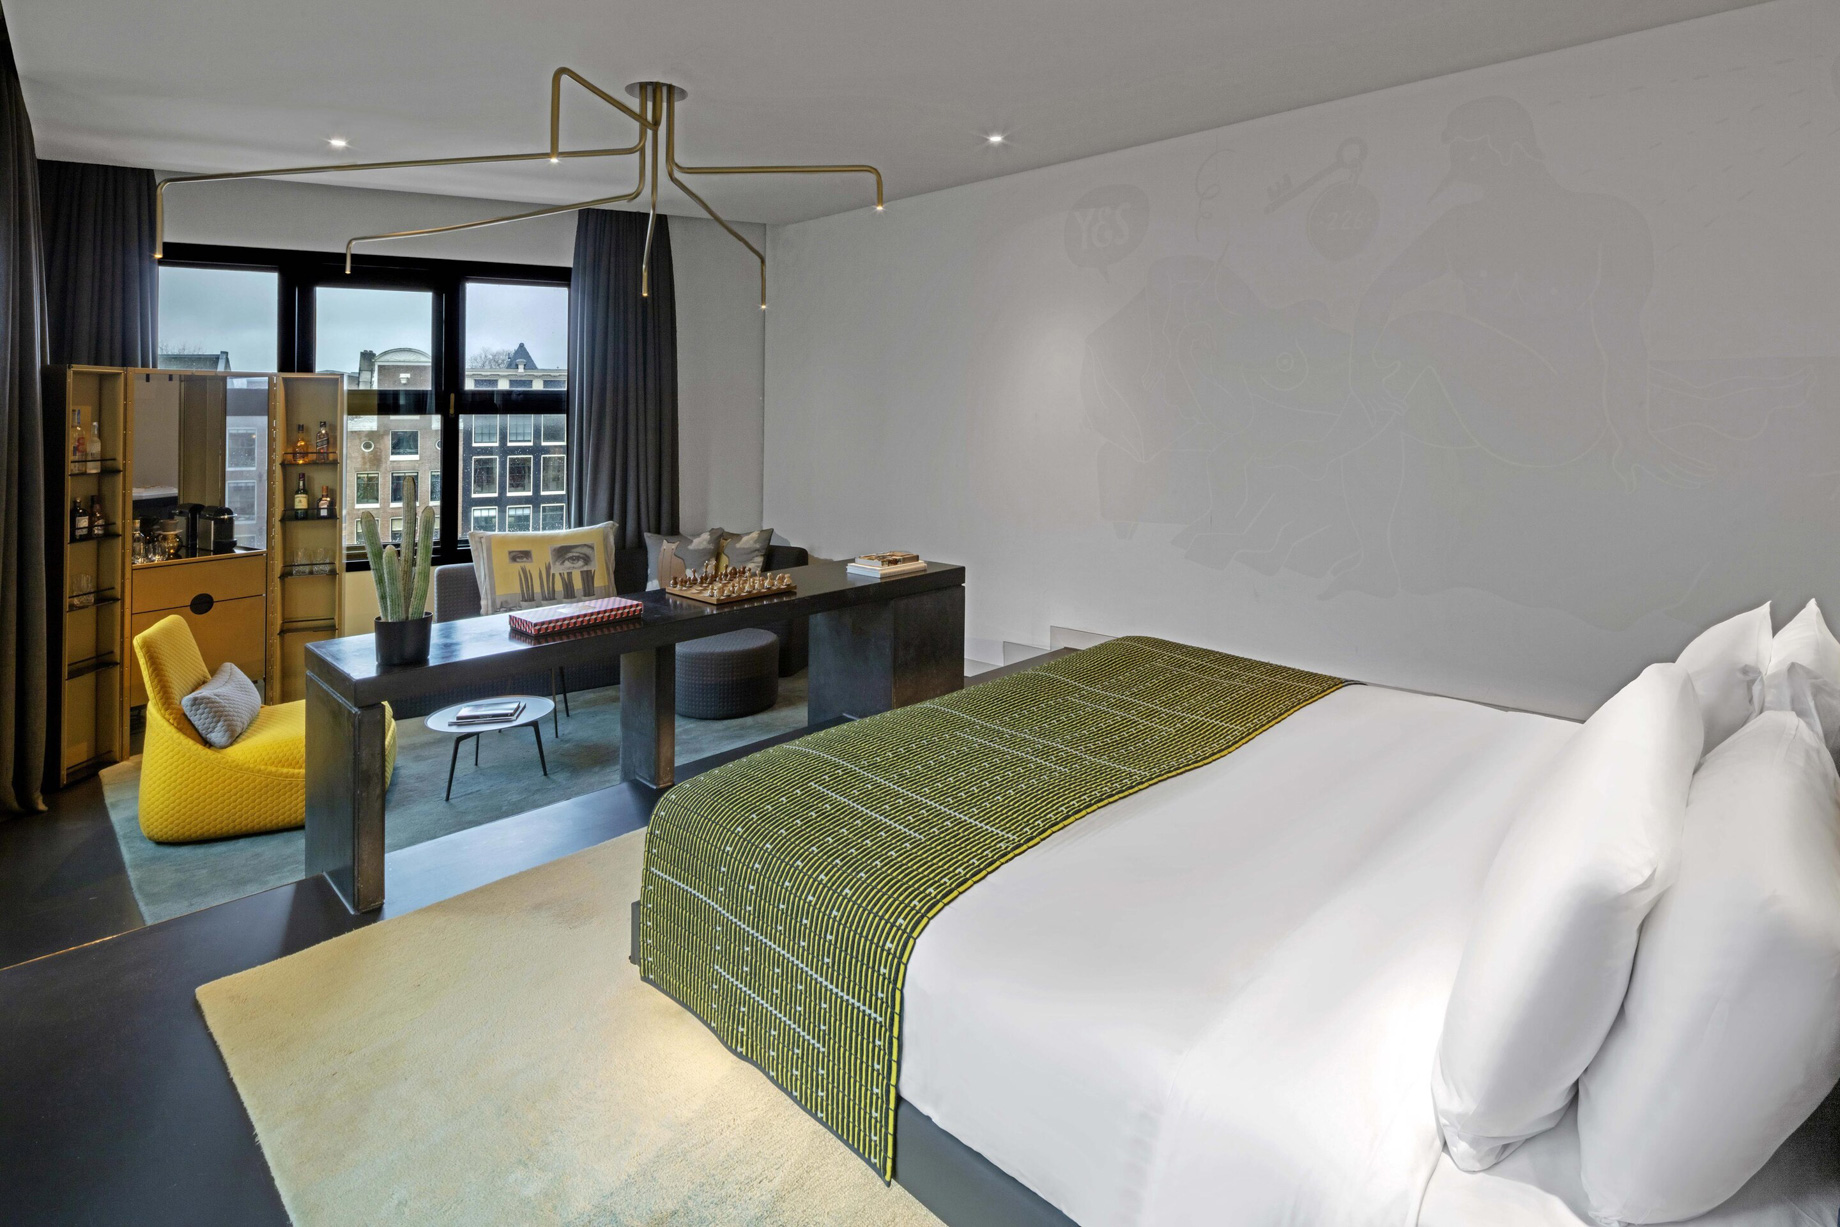 W Amsterdam Hotel - Amsterdam, Netherlands - Studio Bank Suite Bedroom